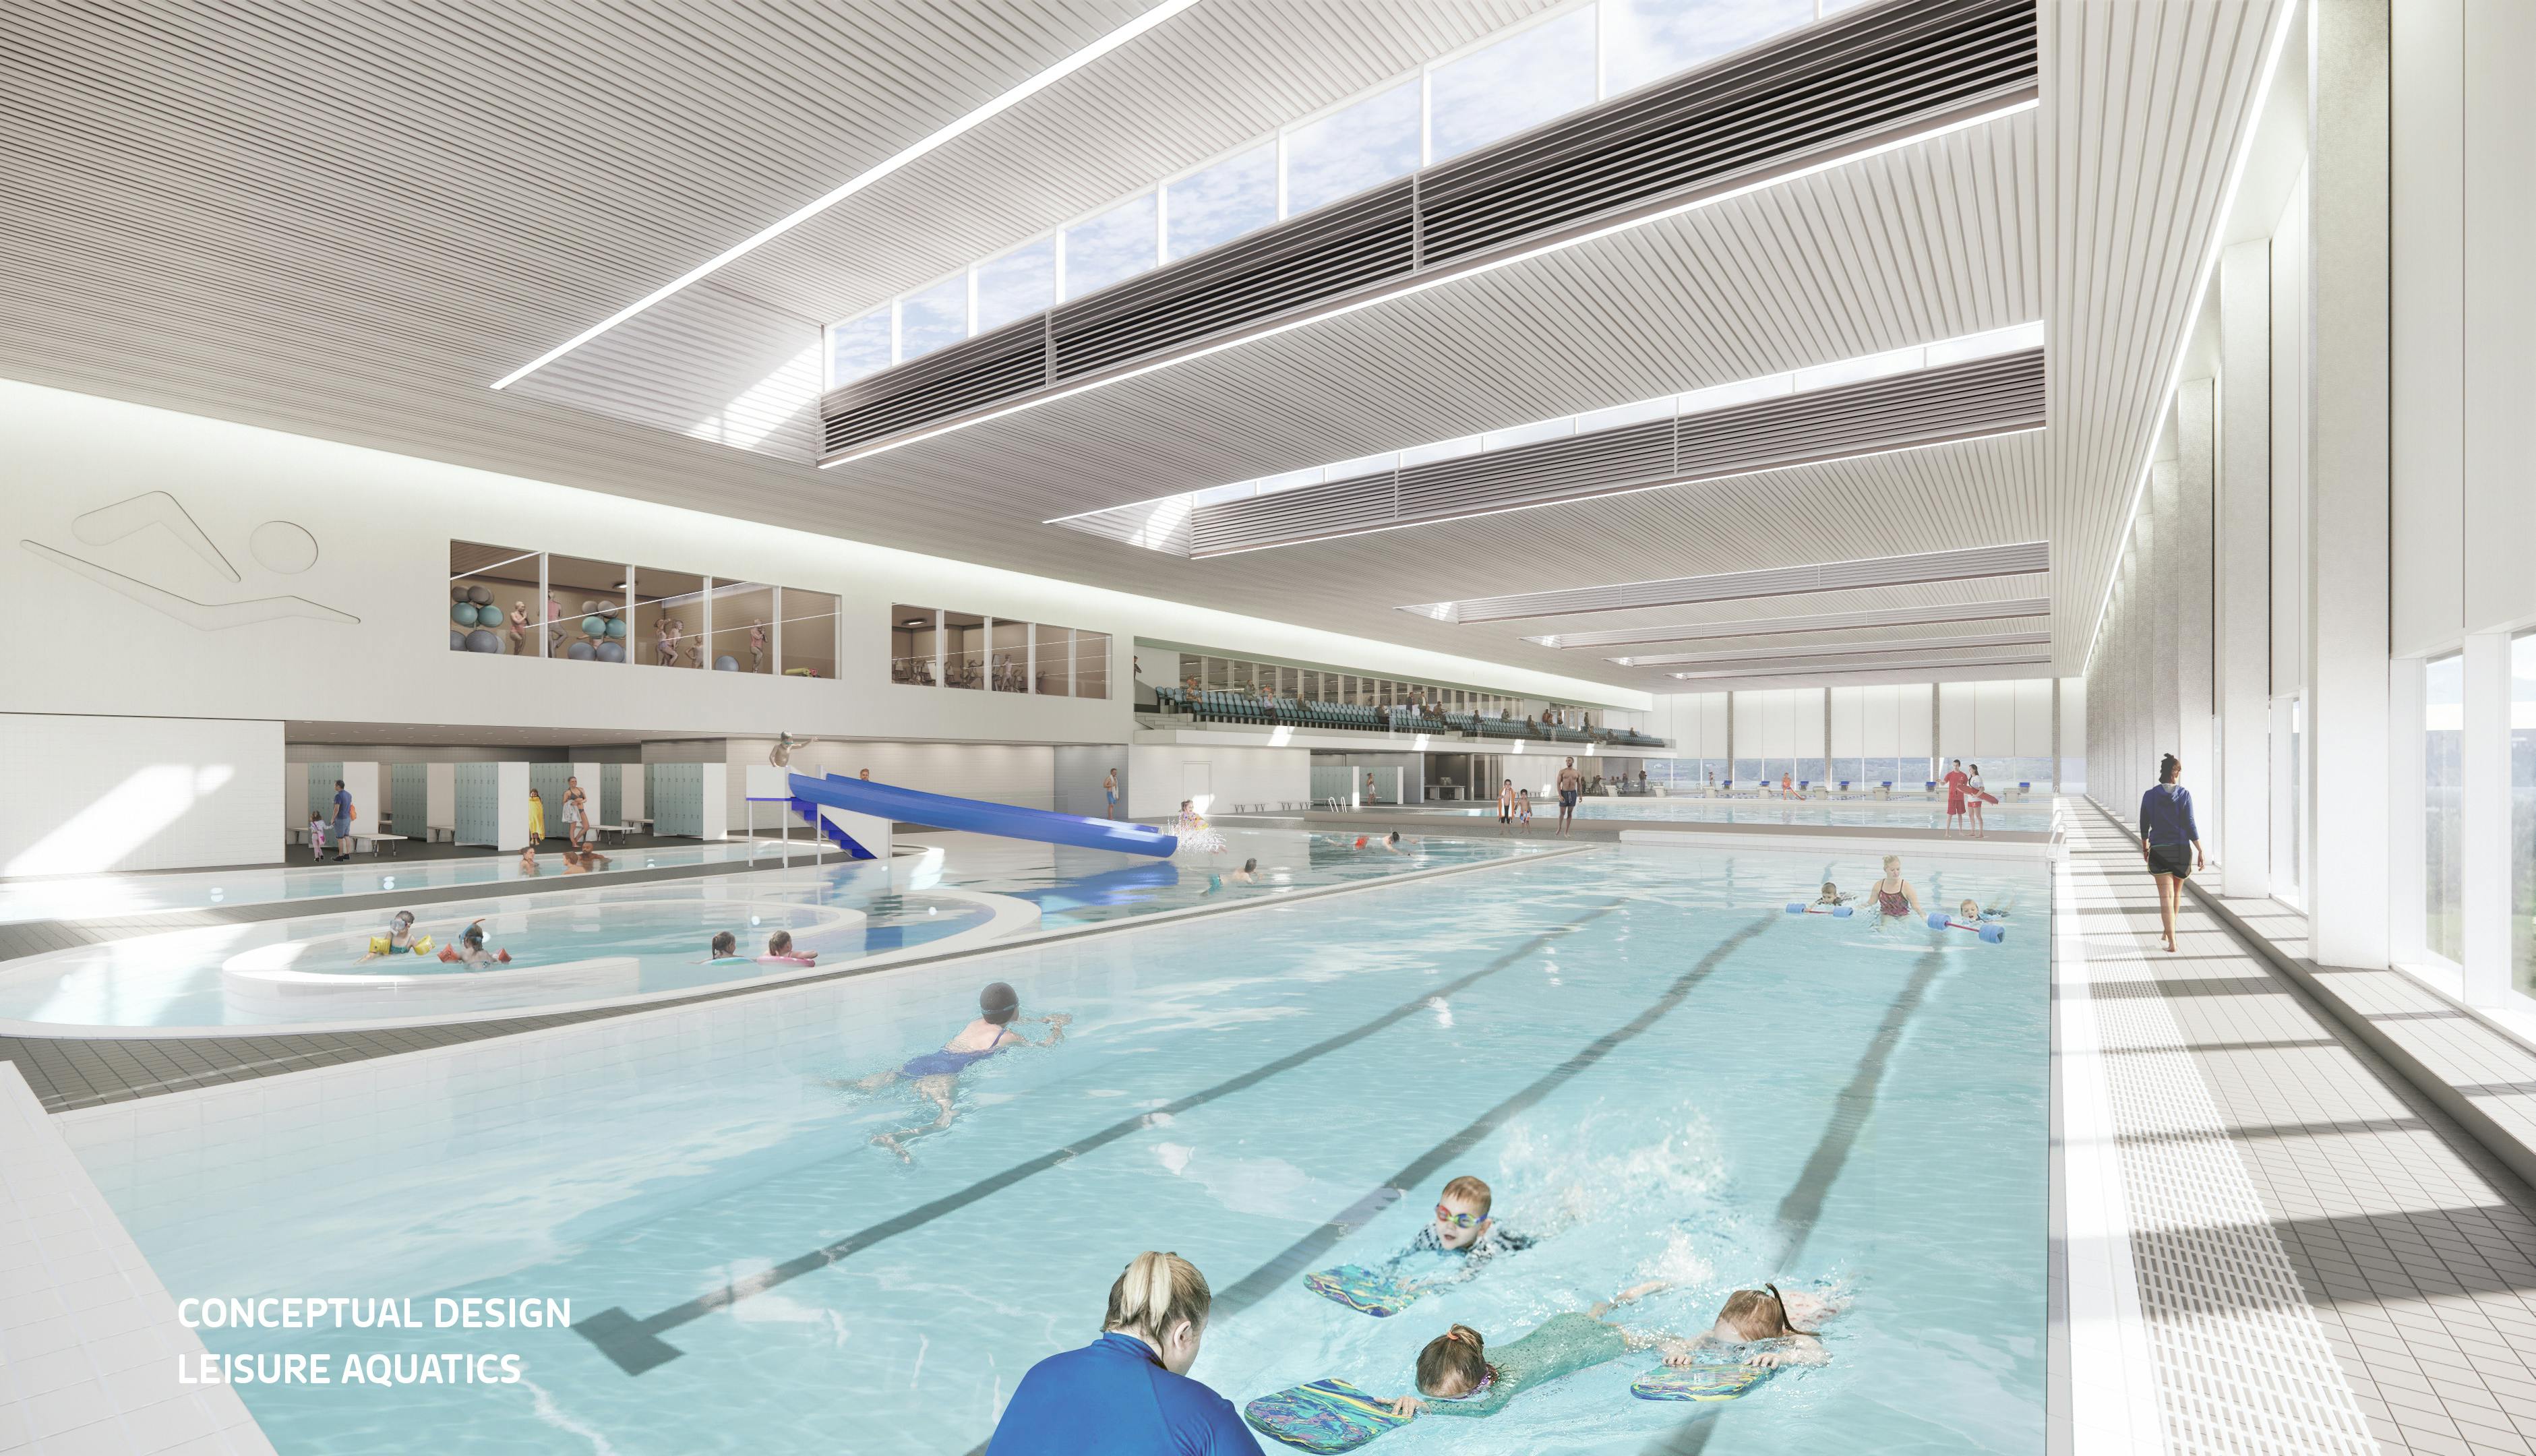 Leisure aquatics and swim lesson area conceptual design